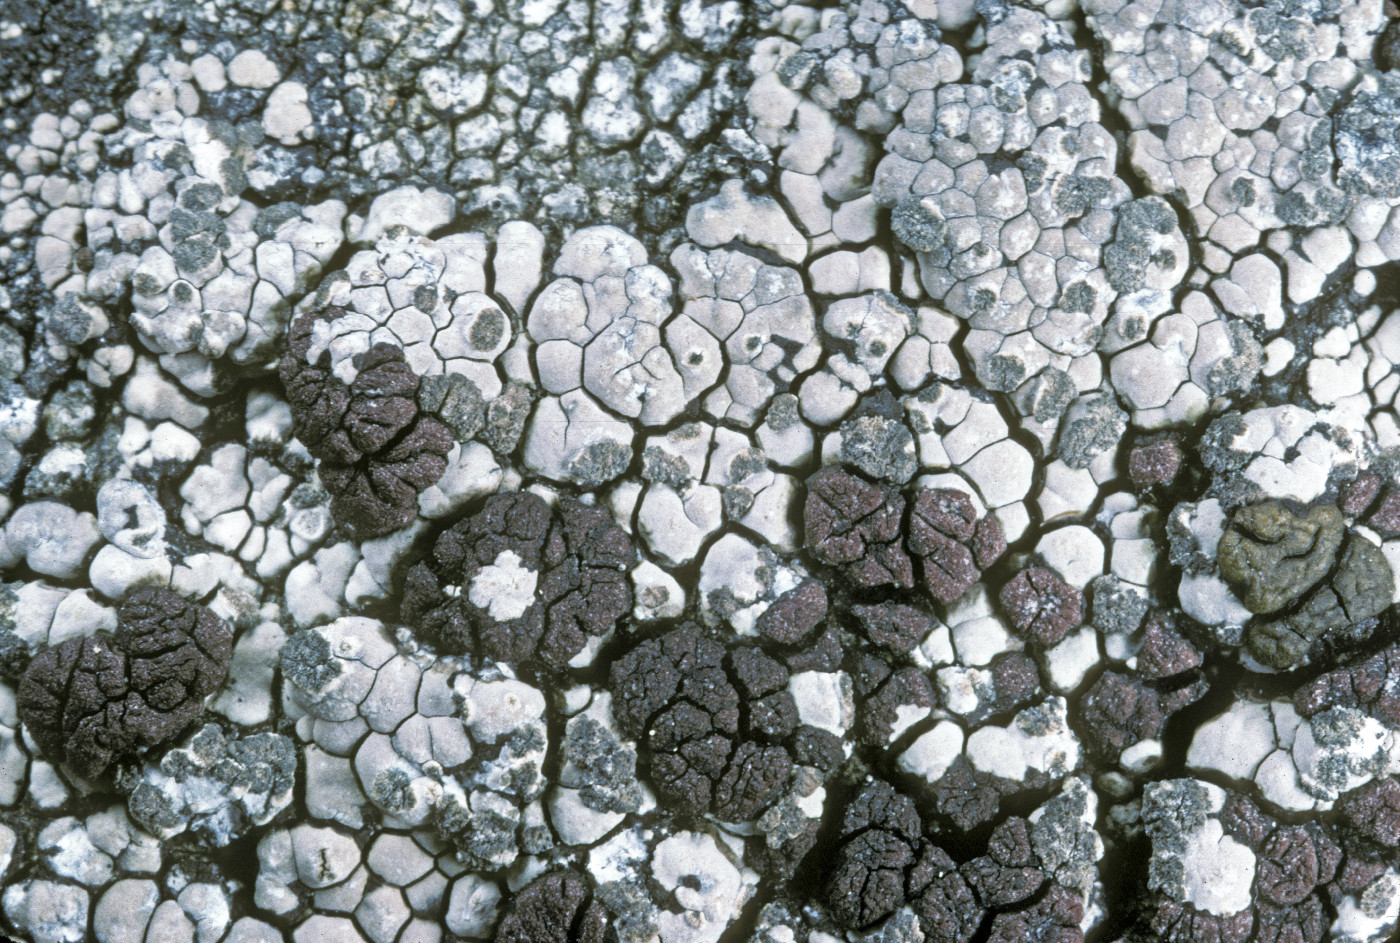 Amygdalaria panaeola image